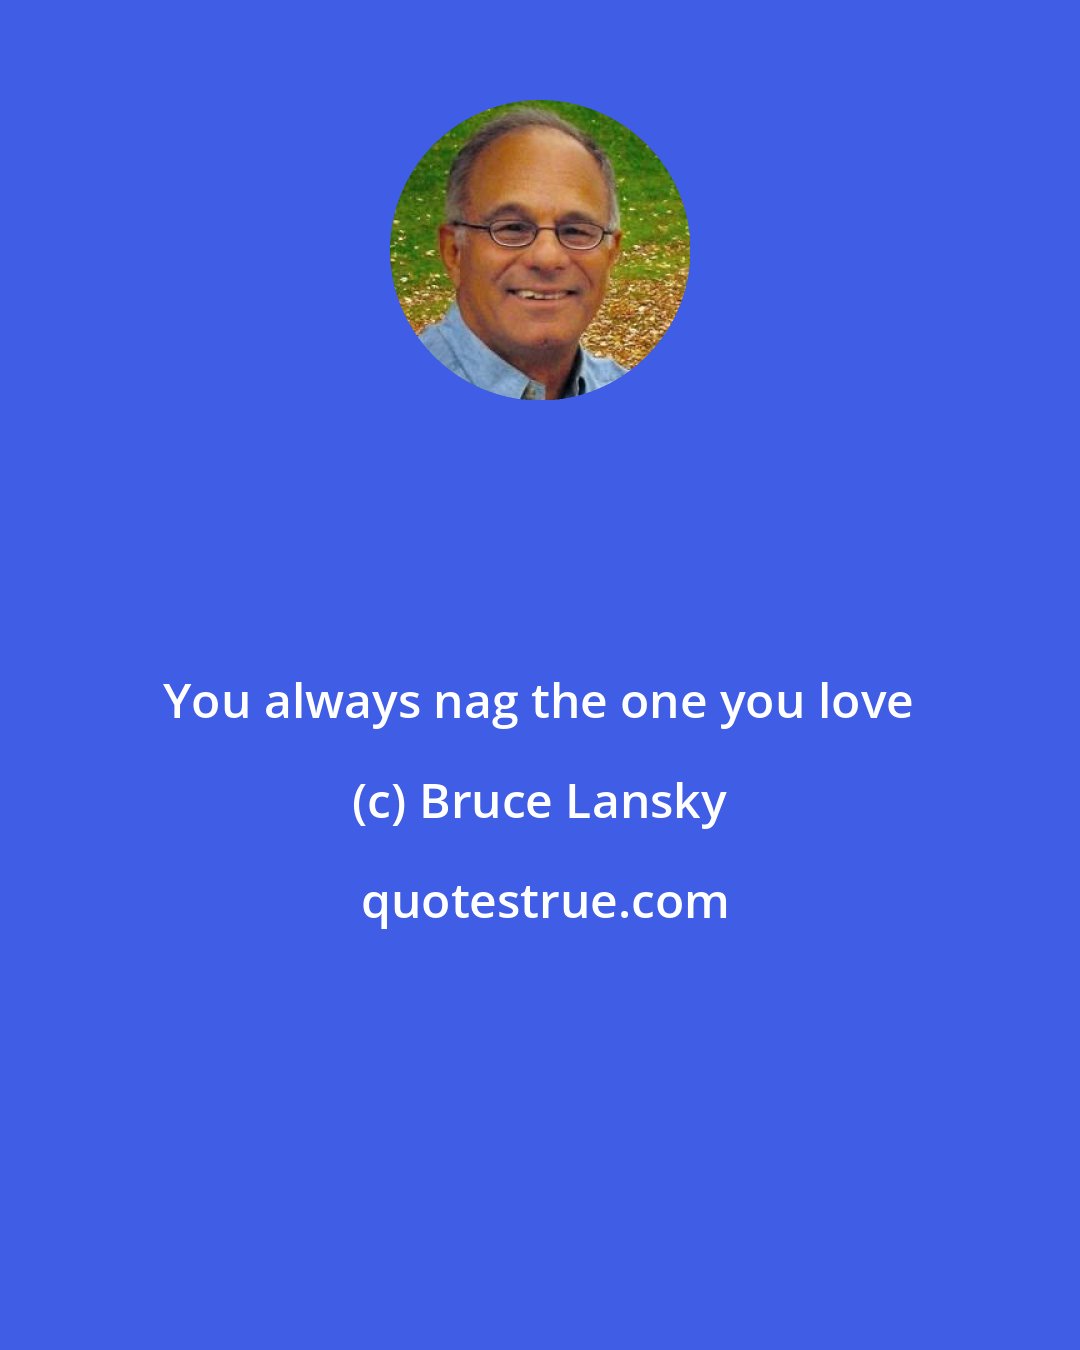 Bruce Lansky: You always nag the one you love